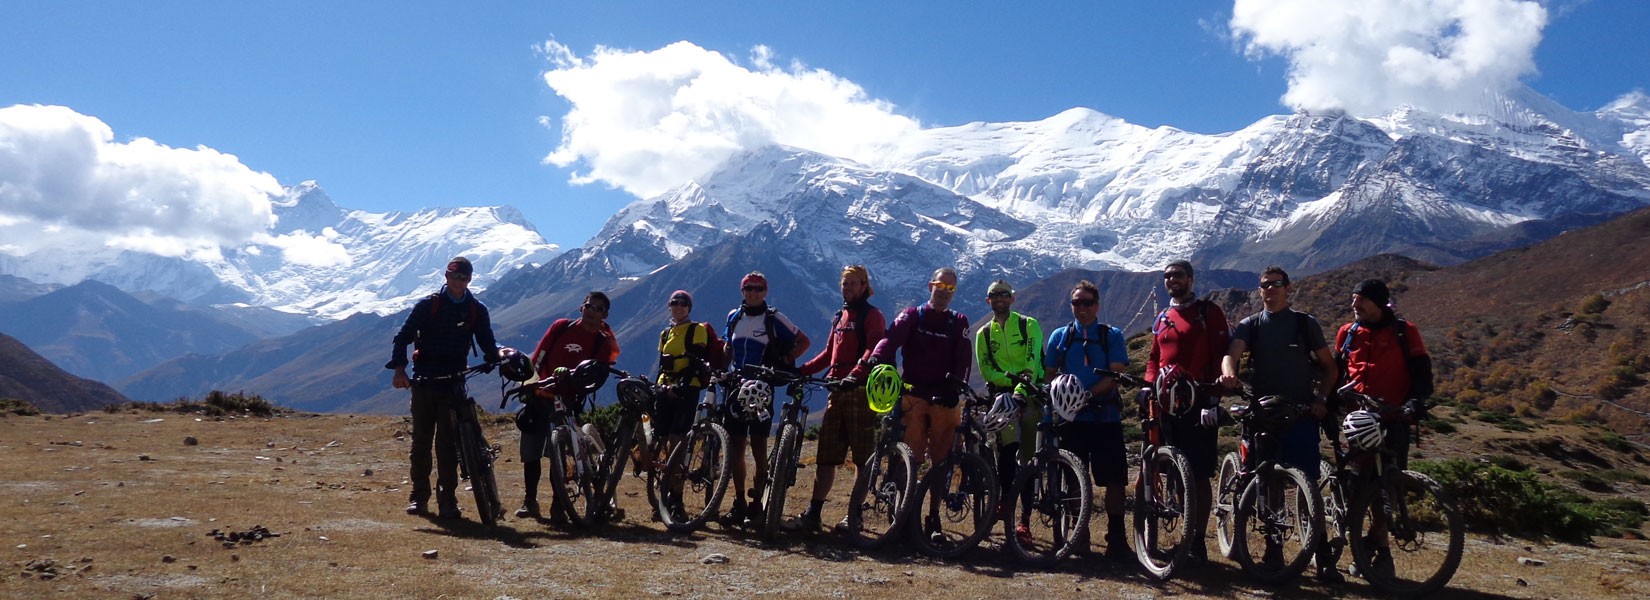 Annapurna Circuit with Tilicho Lake Mountain Biking